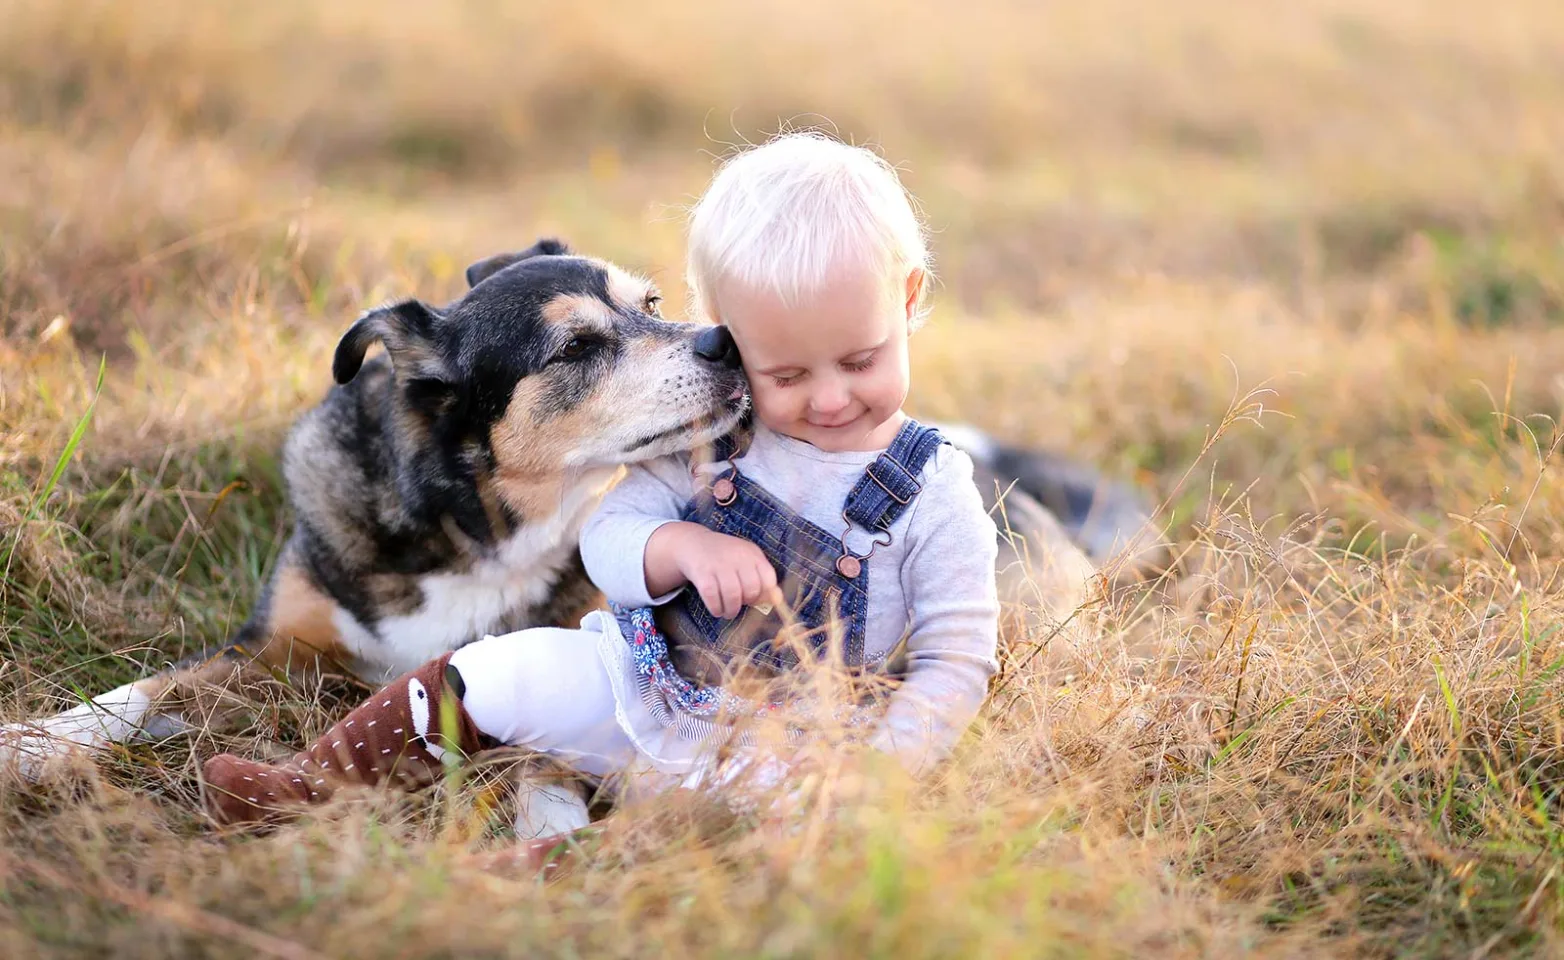  Dog licking kid in grass